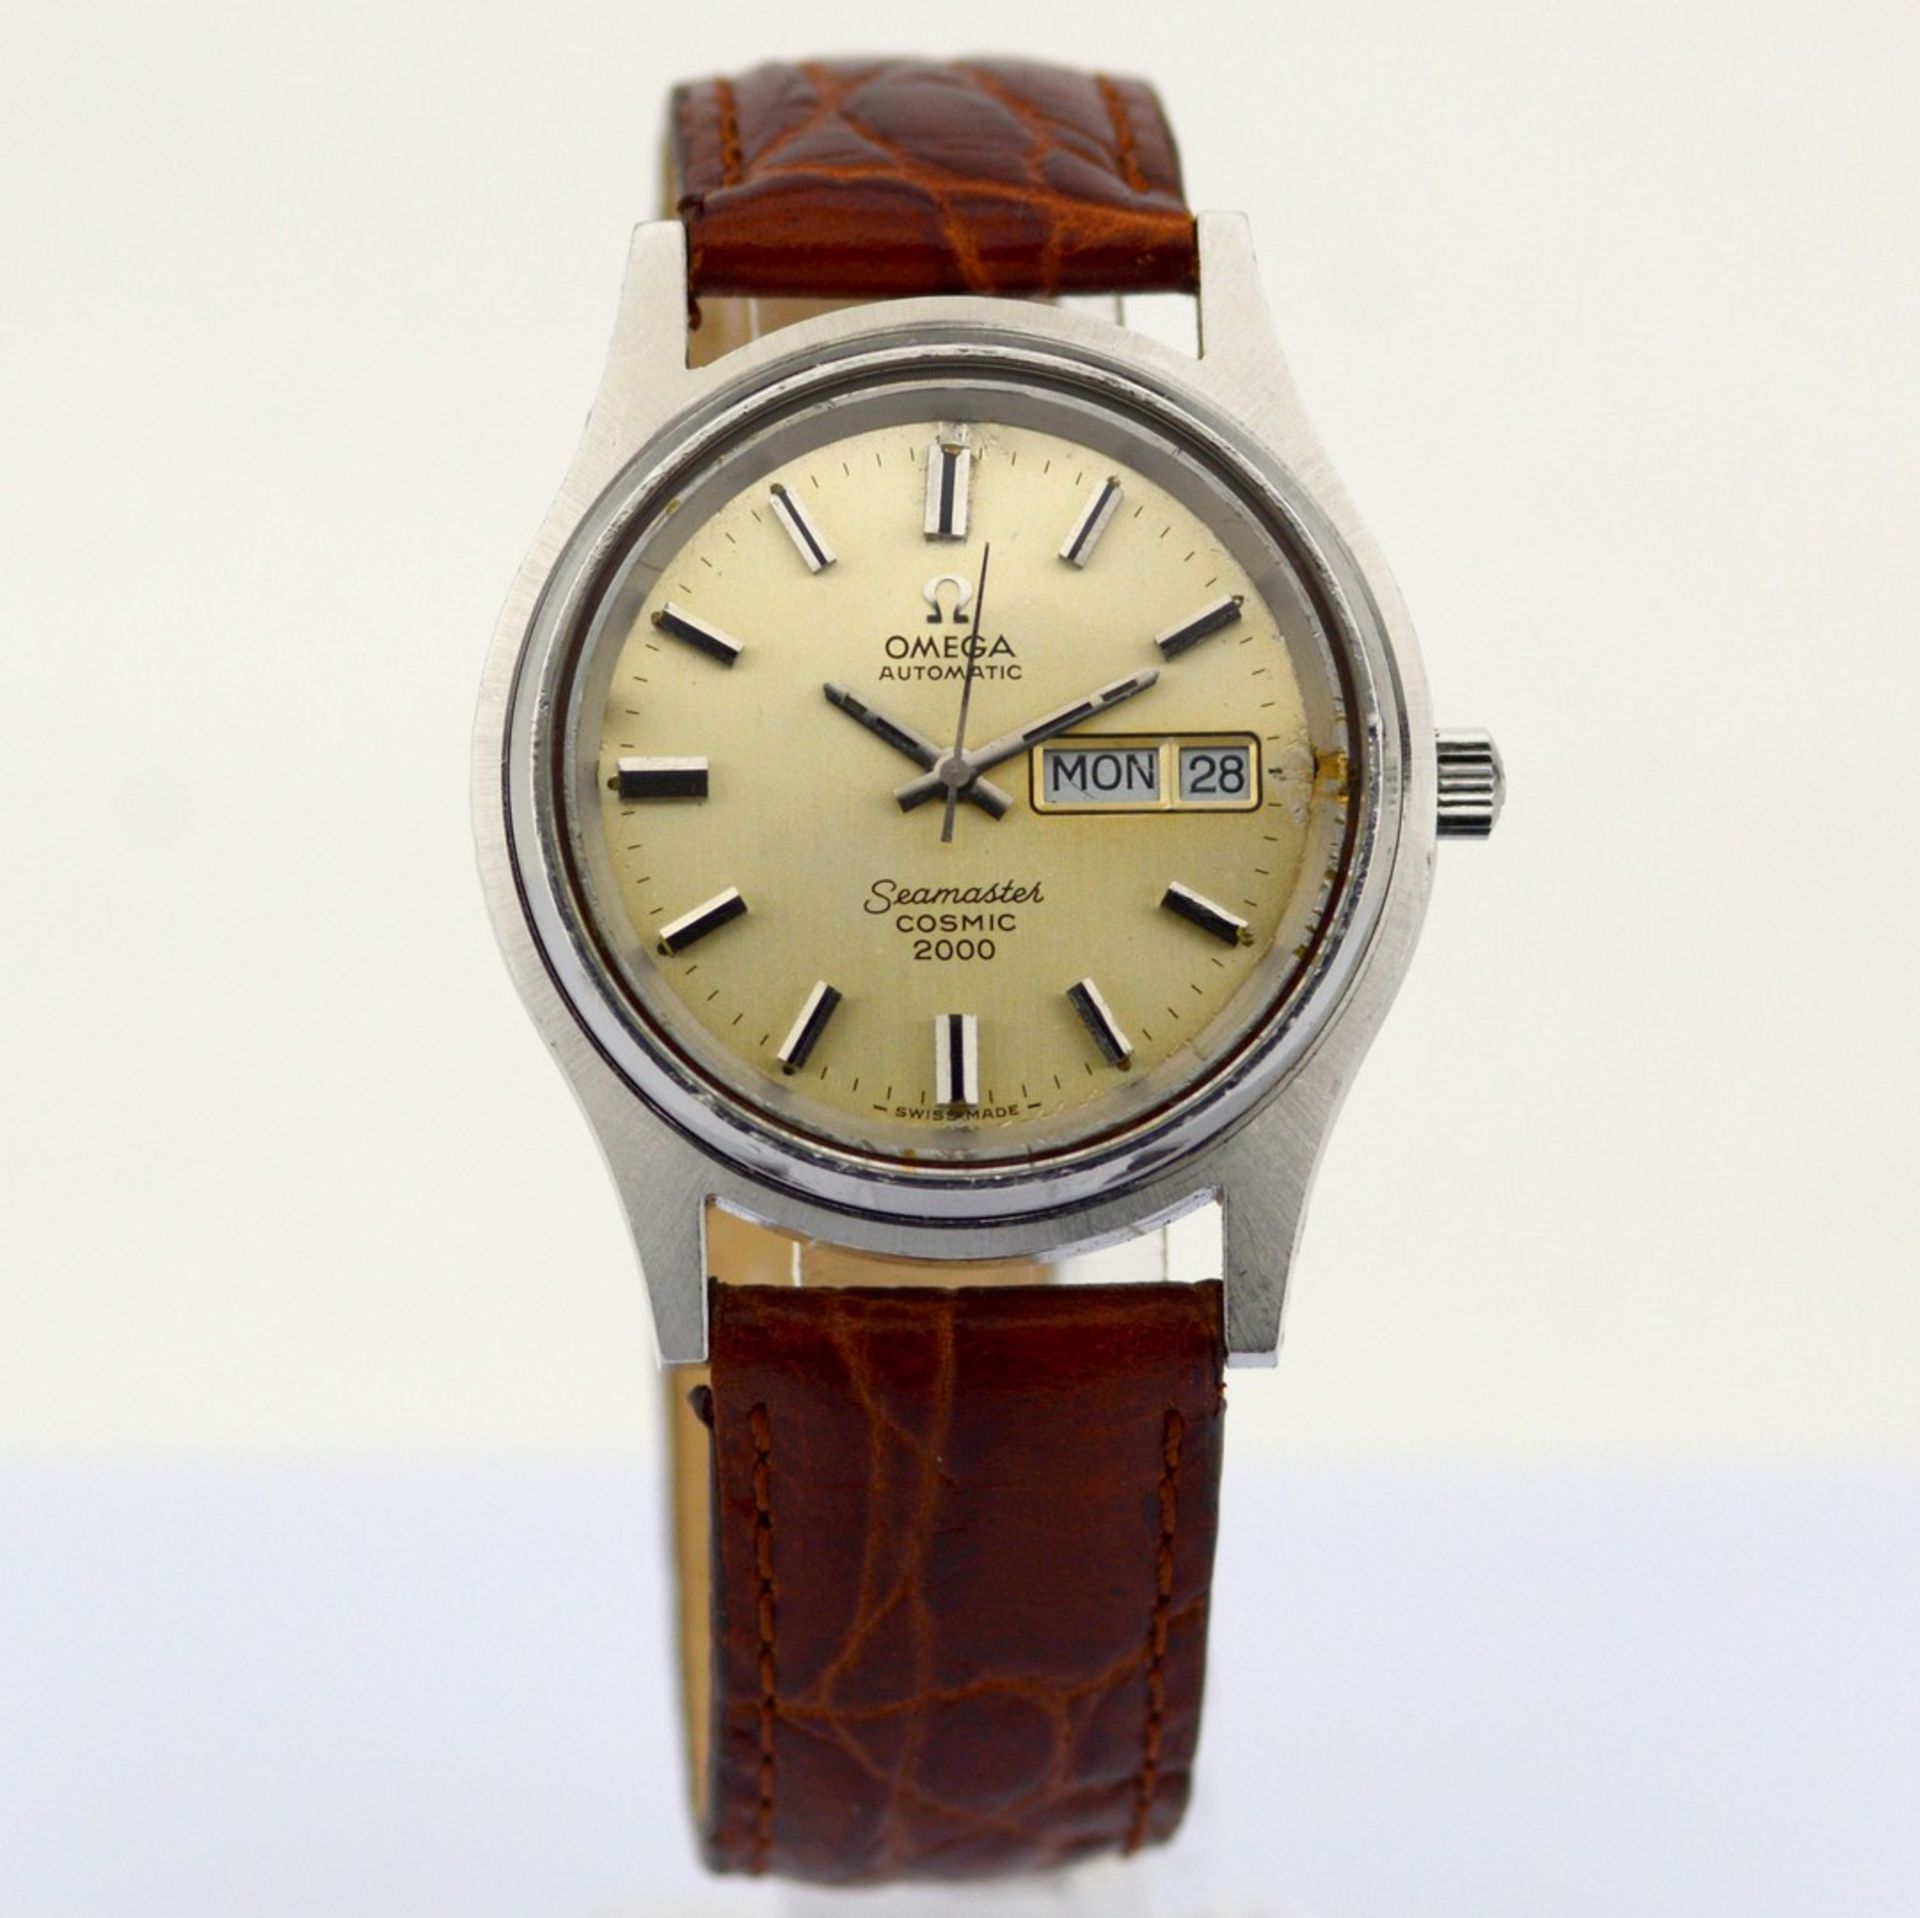 Omega / Seamaster Cosmic 2000 Day Date Automatic Vintage - Gentlmen's Steel Wrist Watch - Image 8 of 9